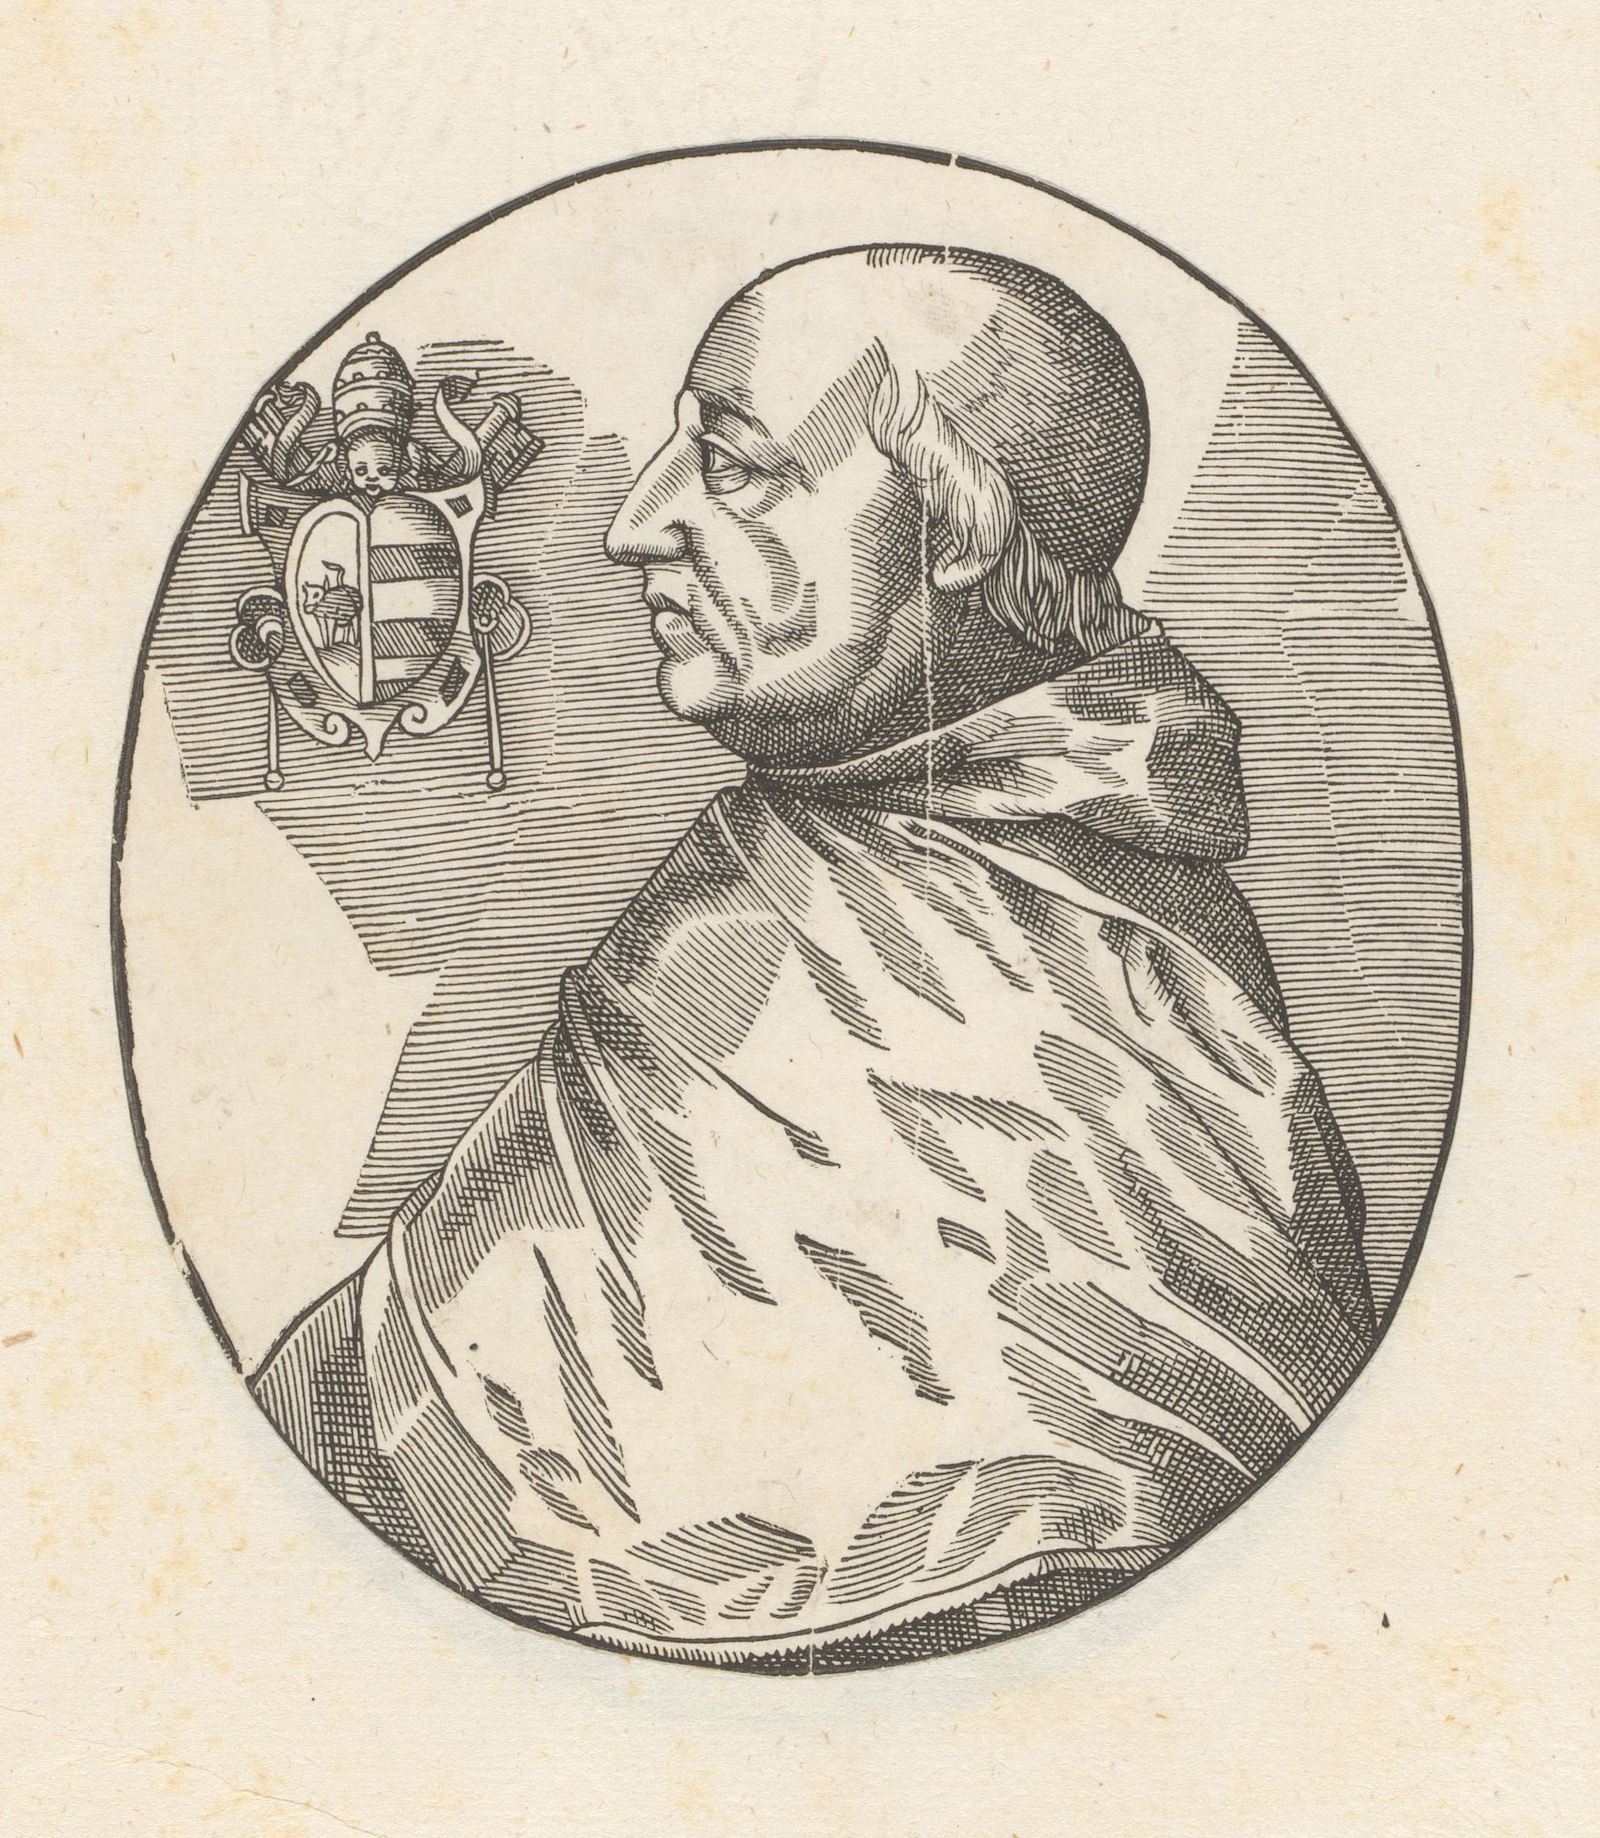 Pope Alexander VI, born Rodrigo Borgia, after Tobias SDtimmer, c. 1549-1573. Rijksmuseum. Public Domain.